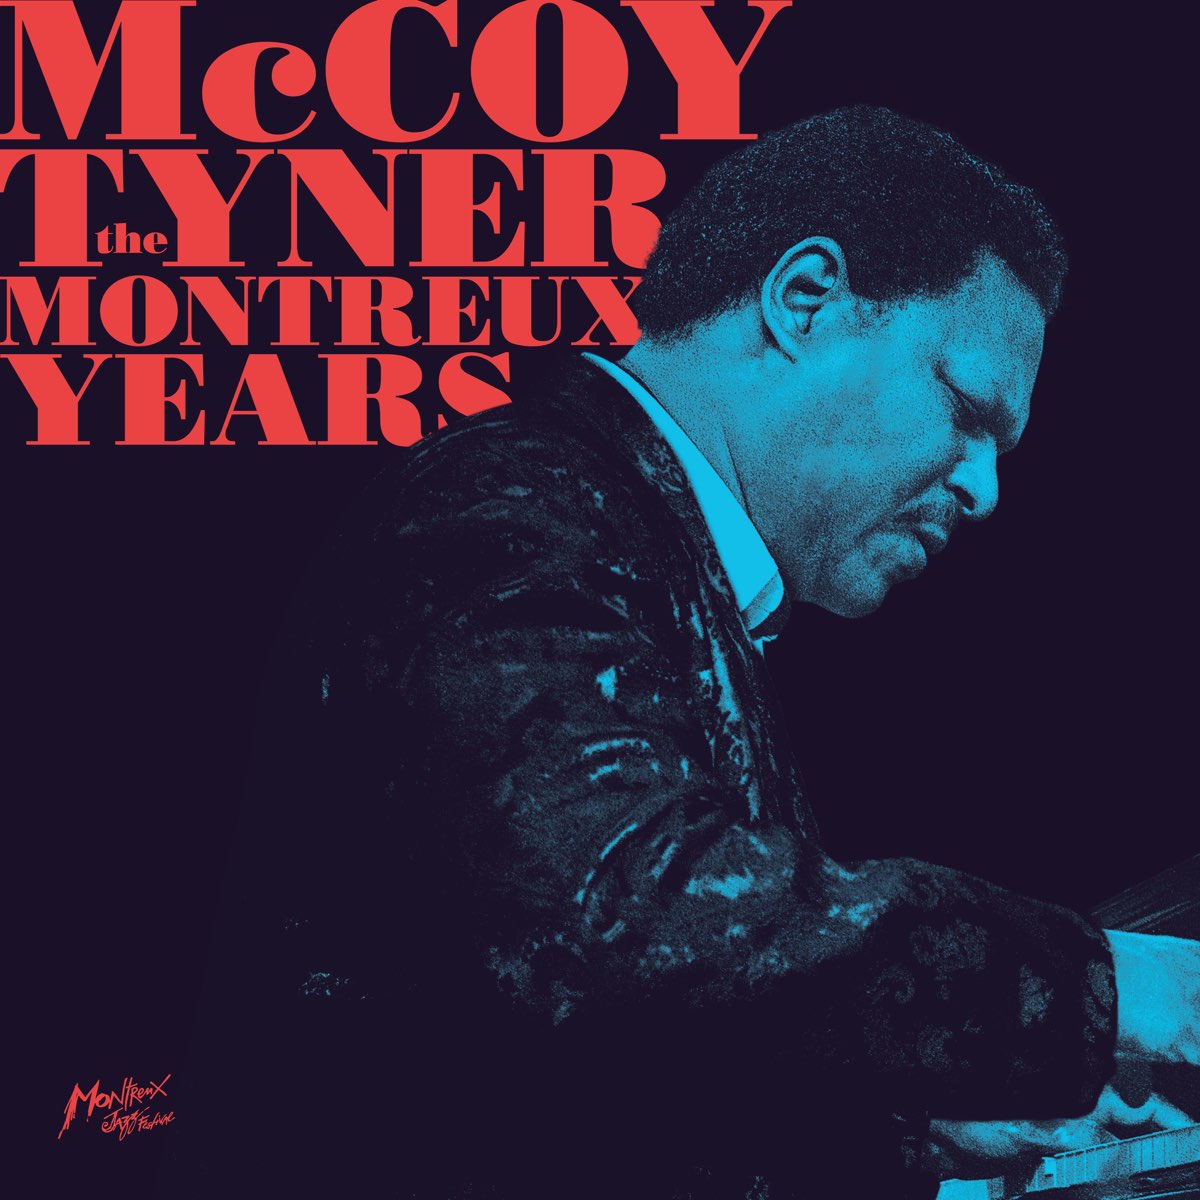 McCoy Tyner - The Montreux Years (Live) - マッコイ・タイナーのアルバム - Apple Music